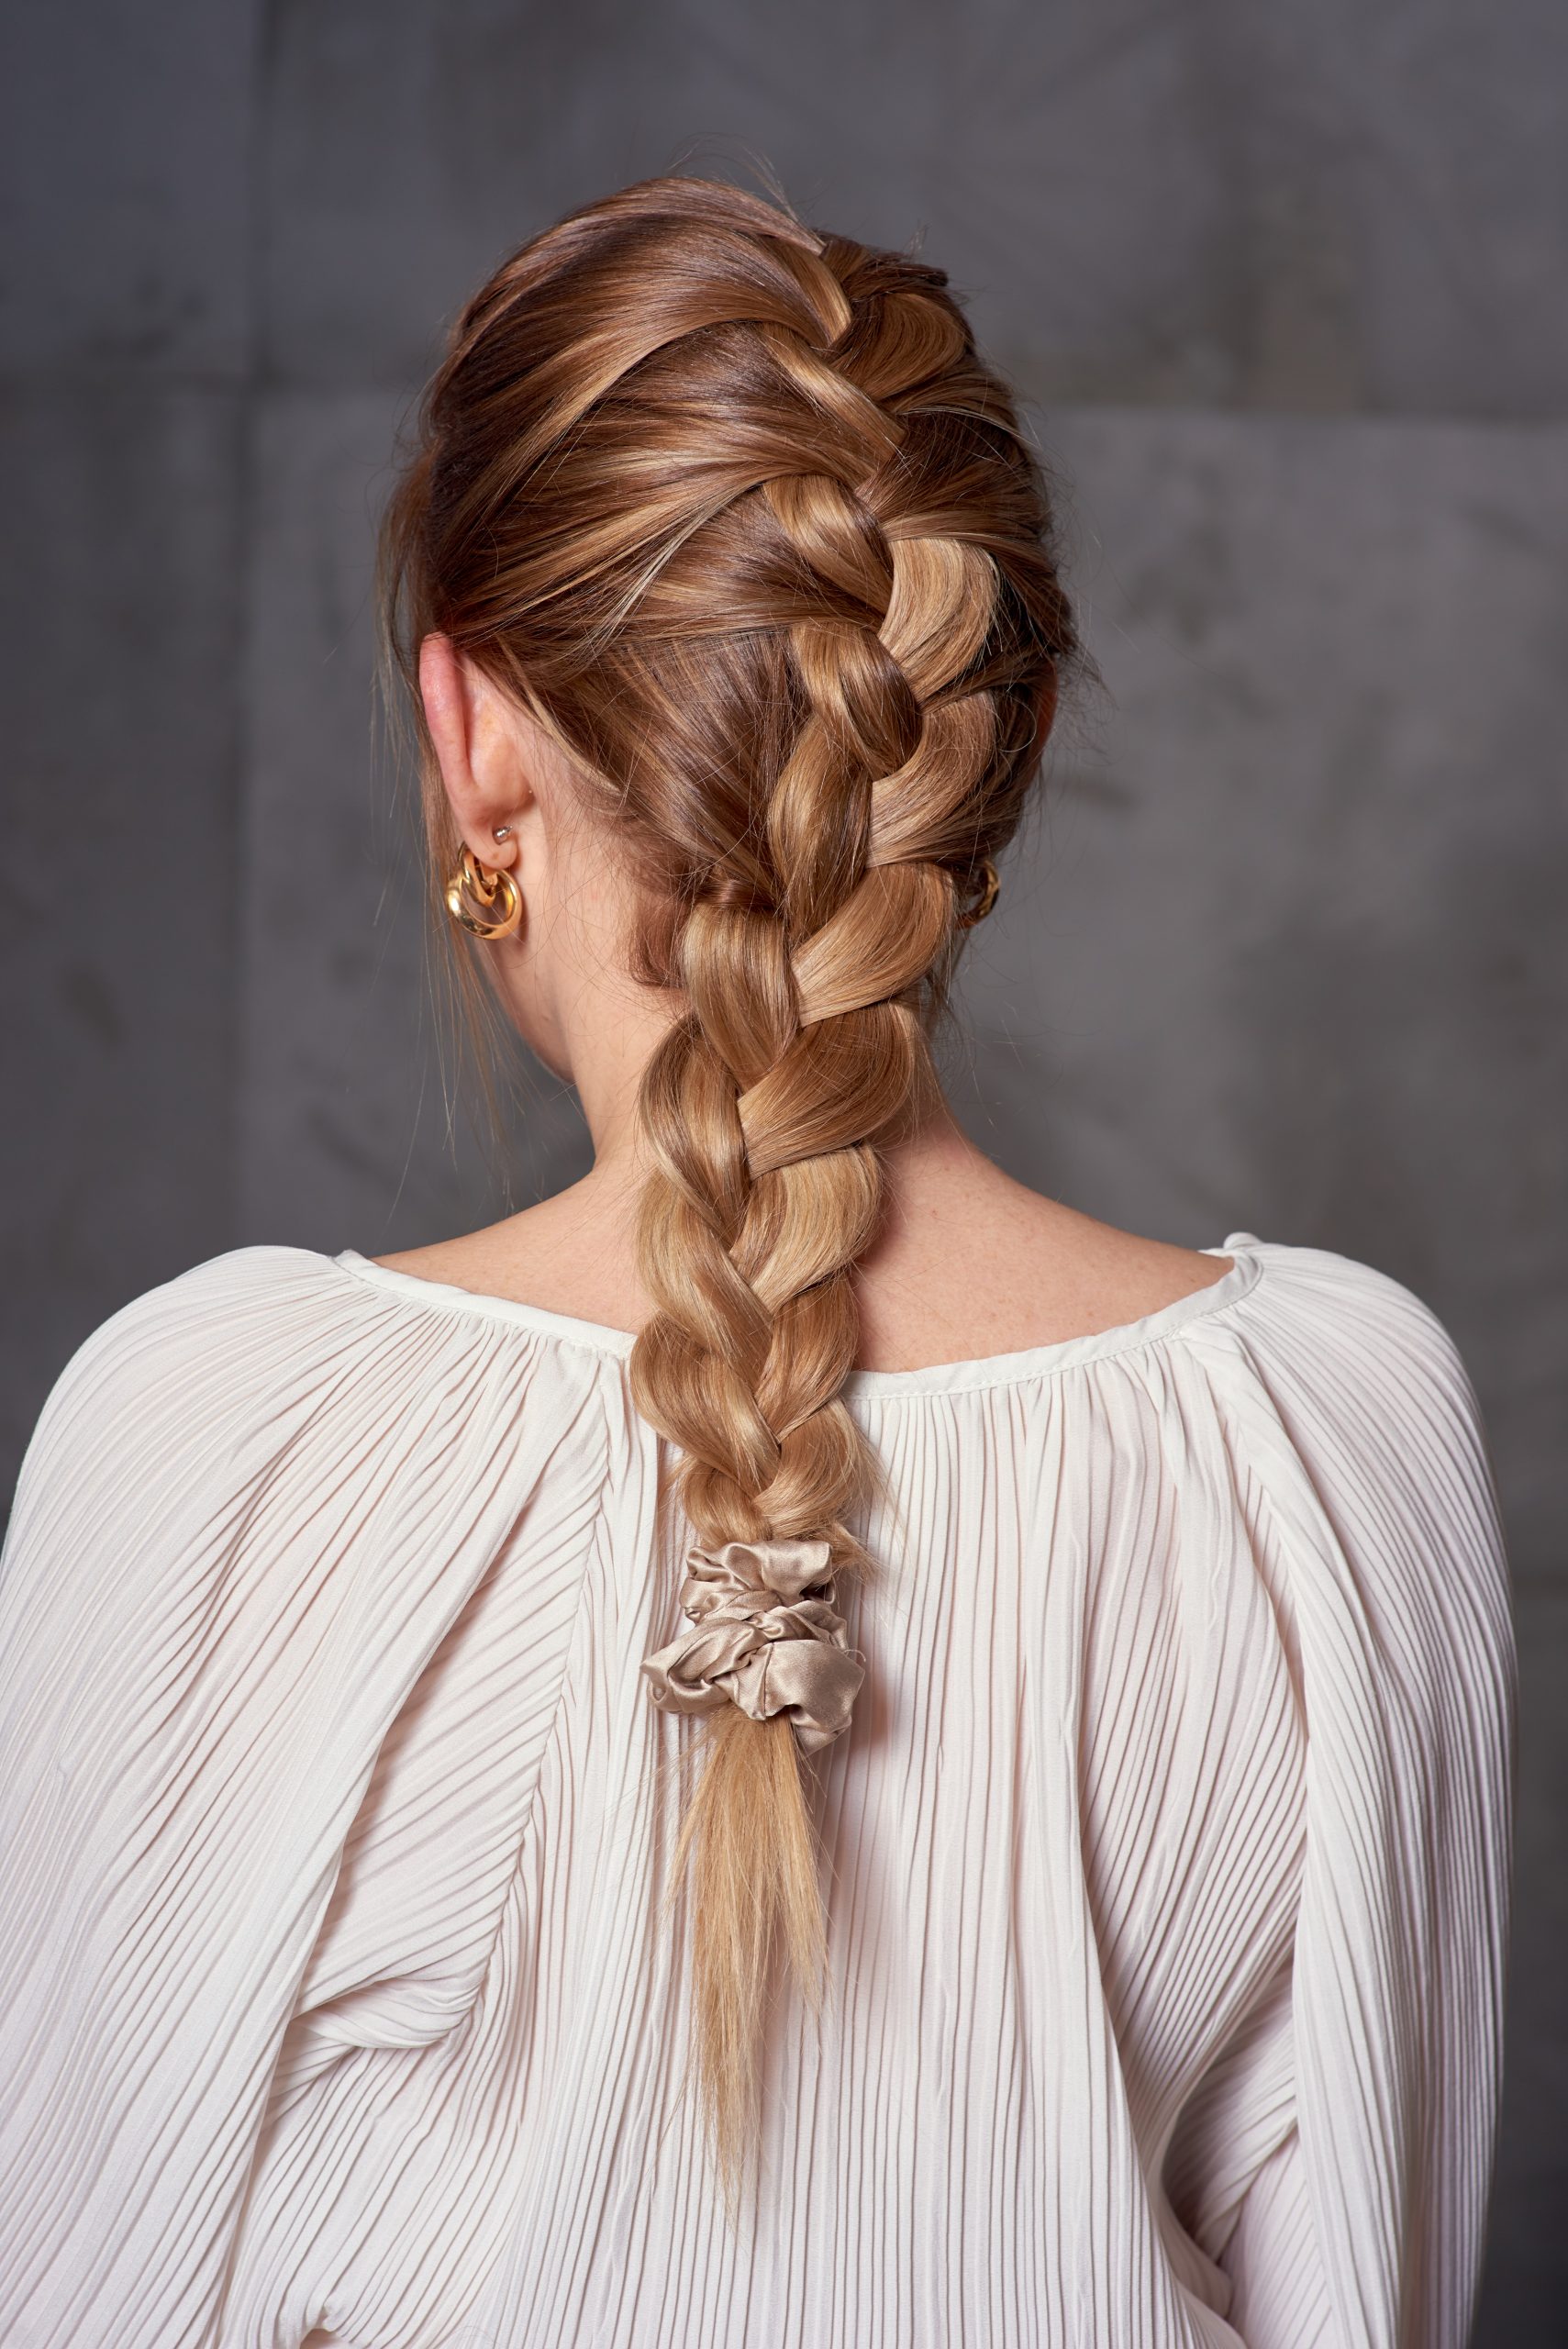 Easy hairstyle #fishtailbraid #braidturorial | fishtail braid overnight |  TikTok